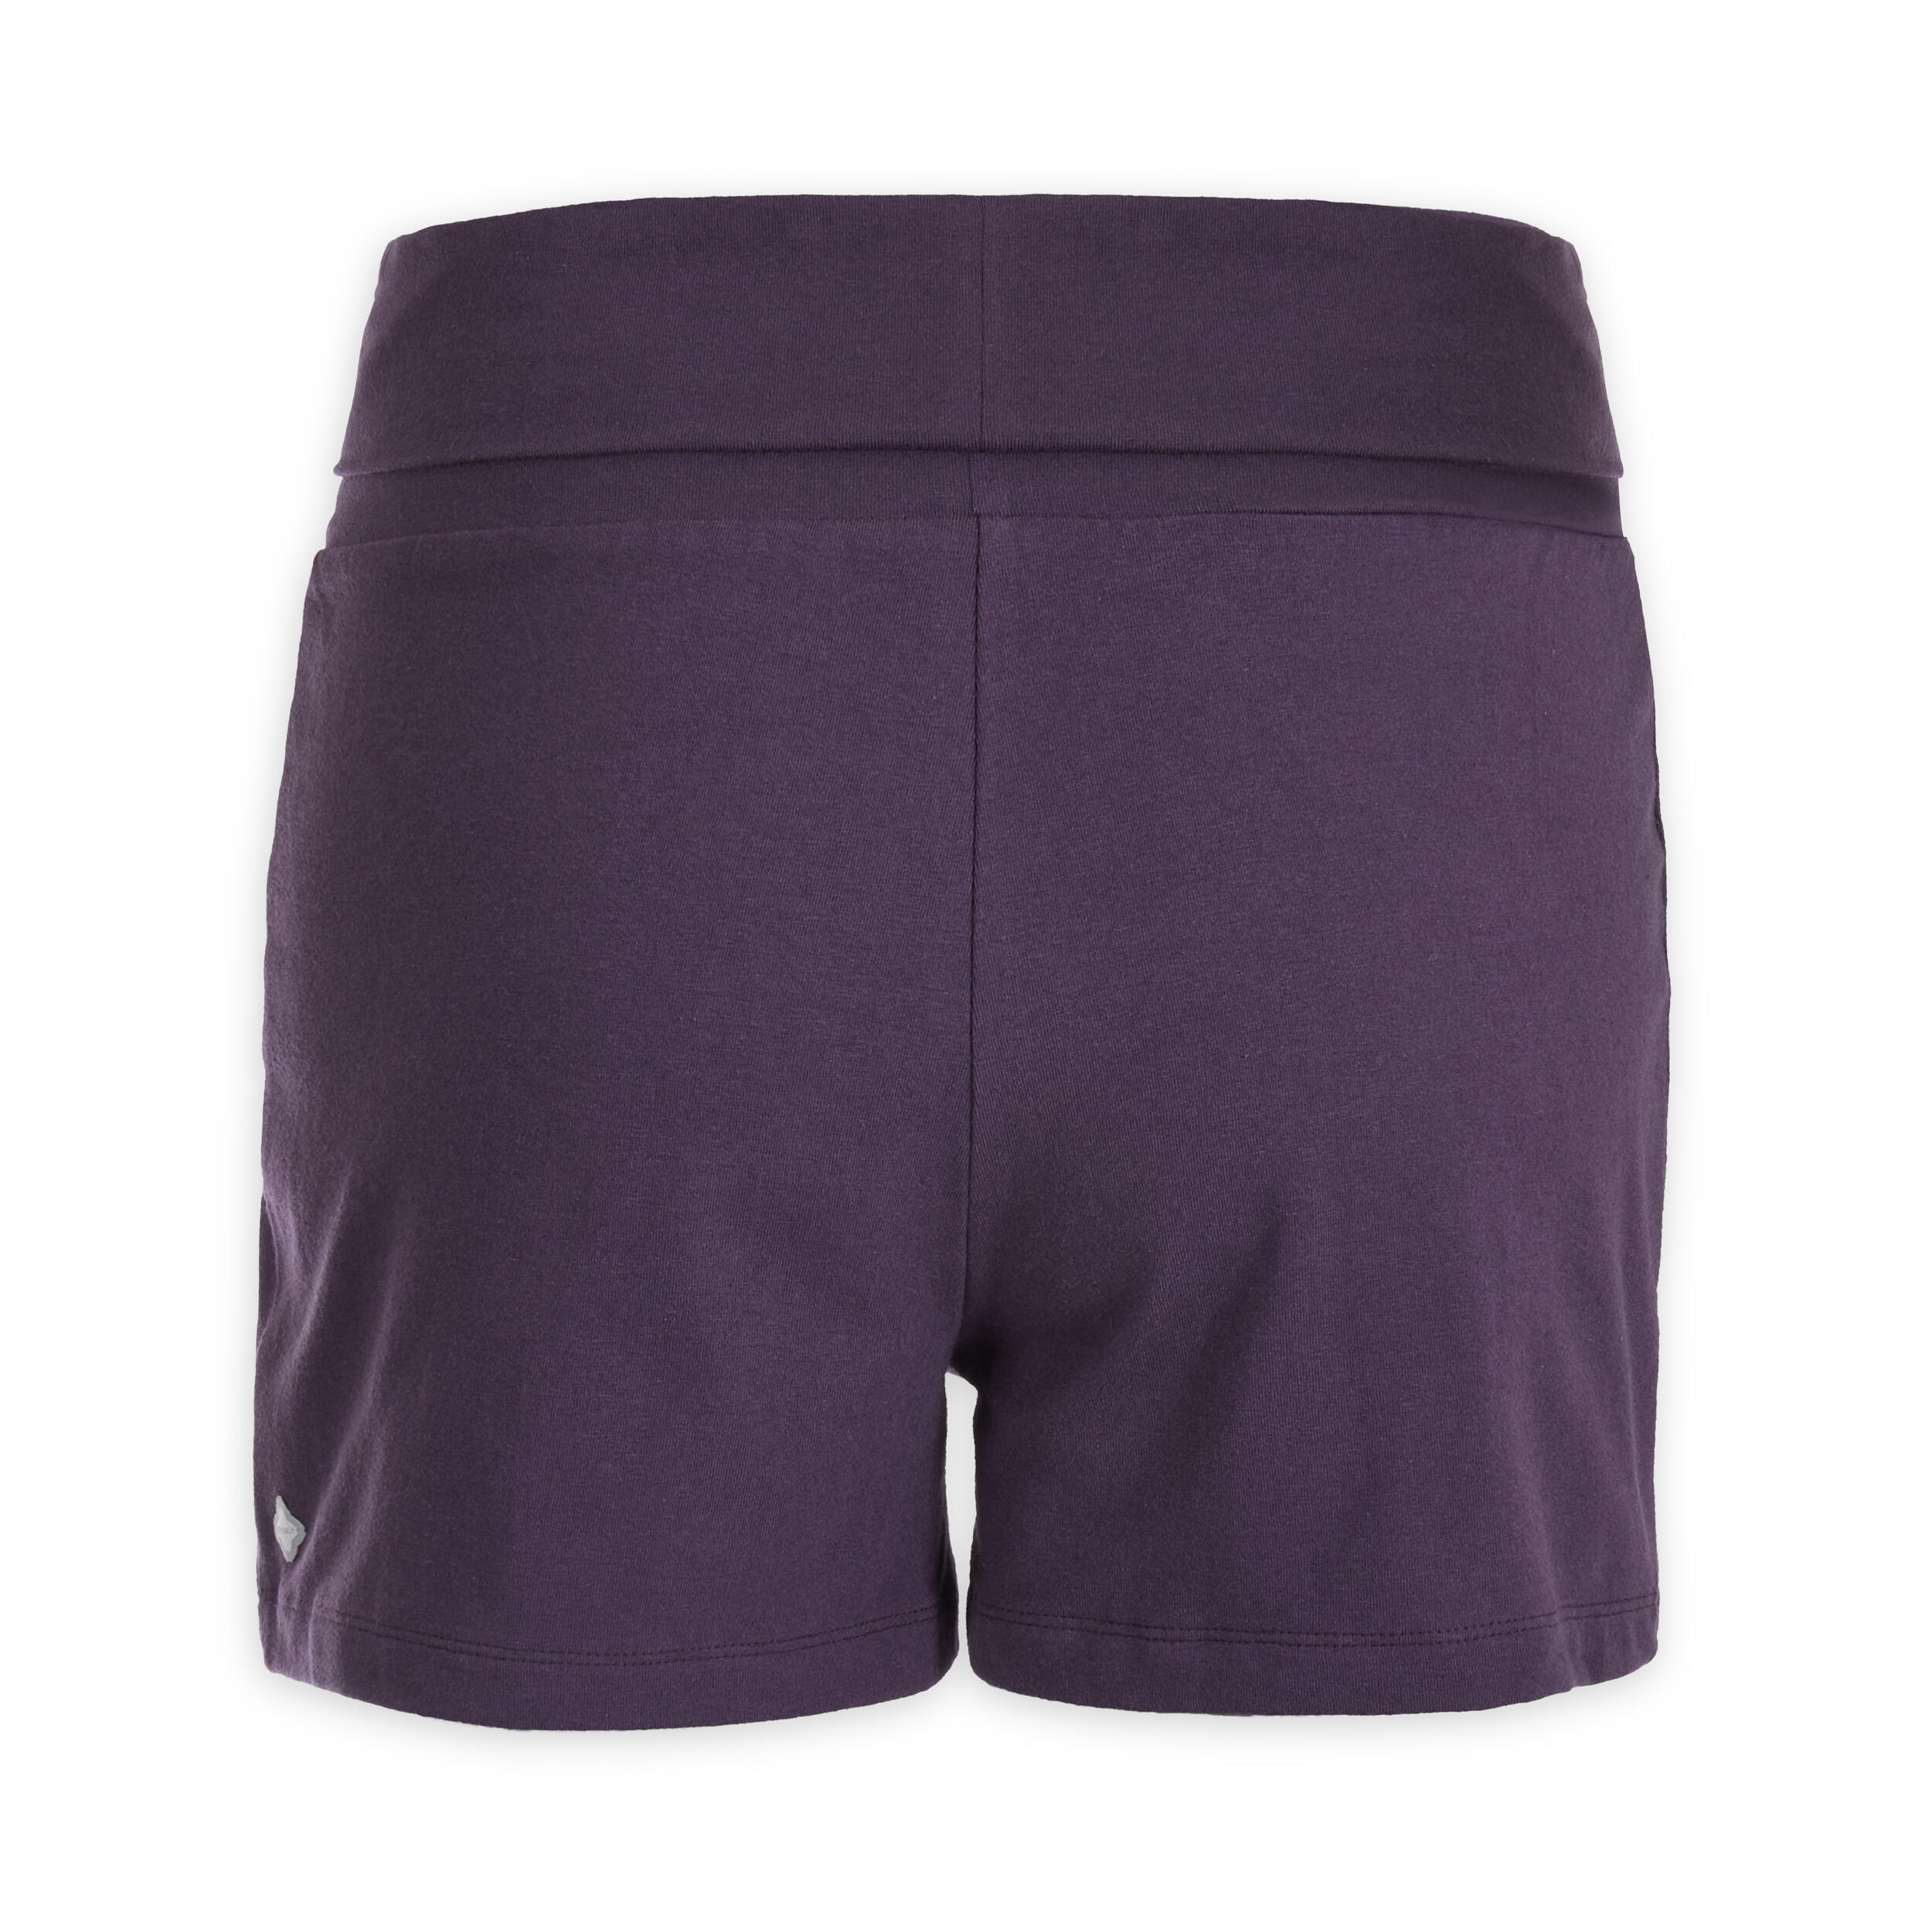 Women's Cotton Yoga Shorts - Purple 6/7